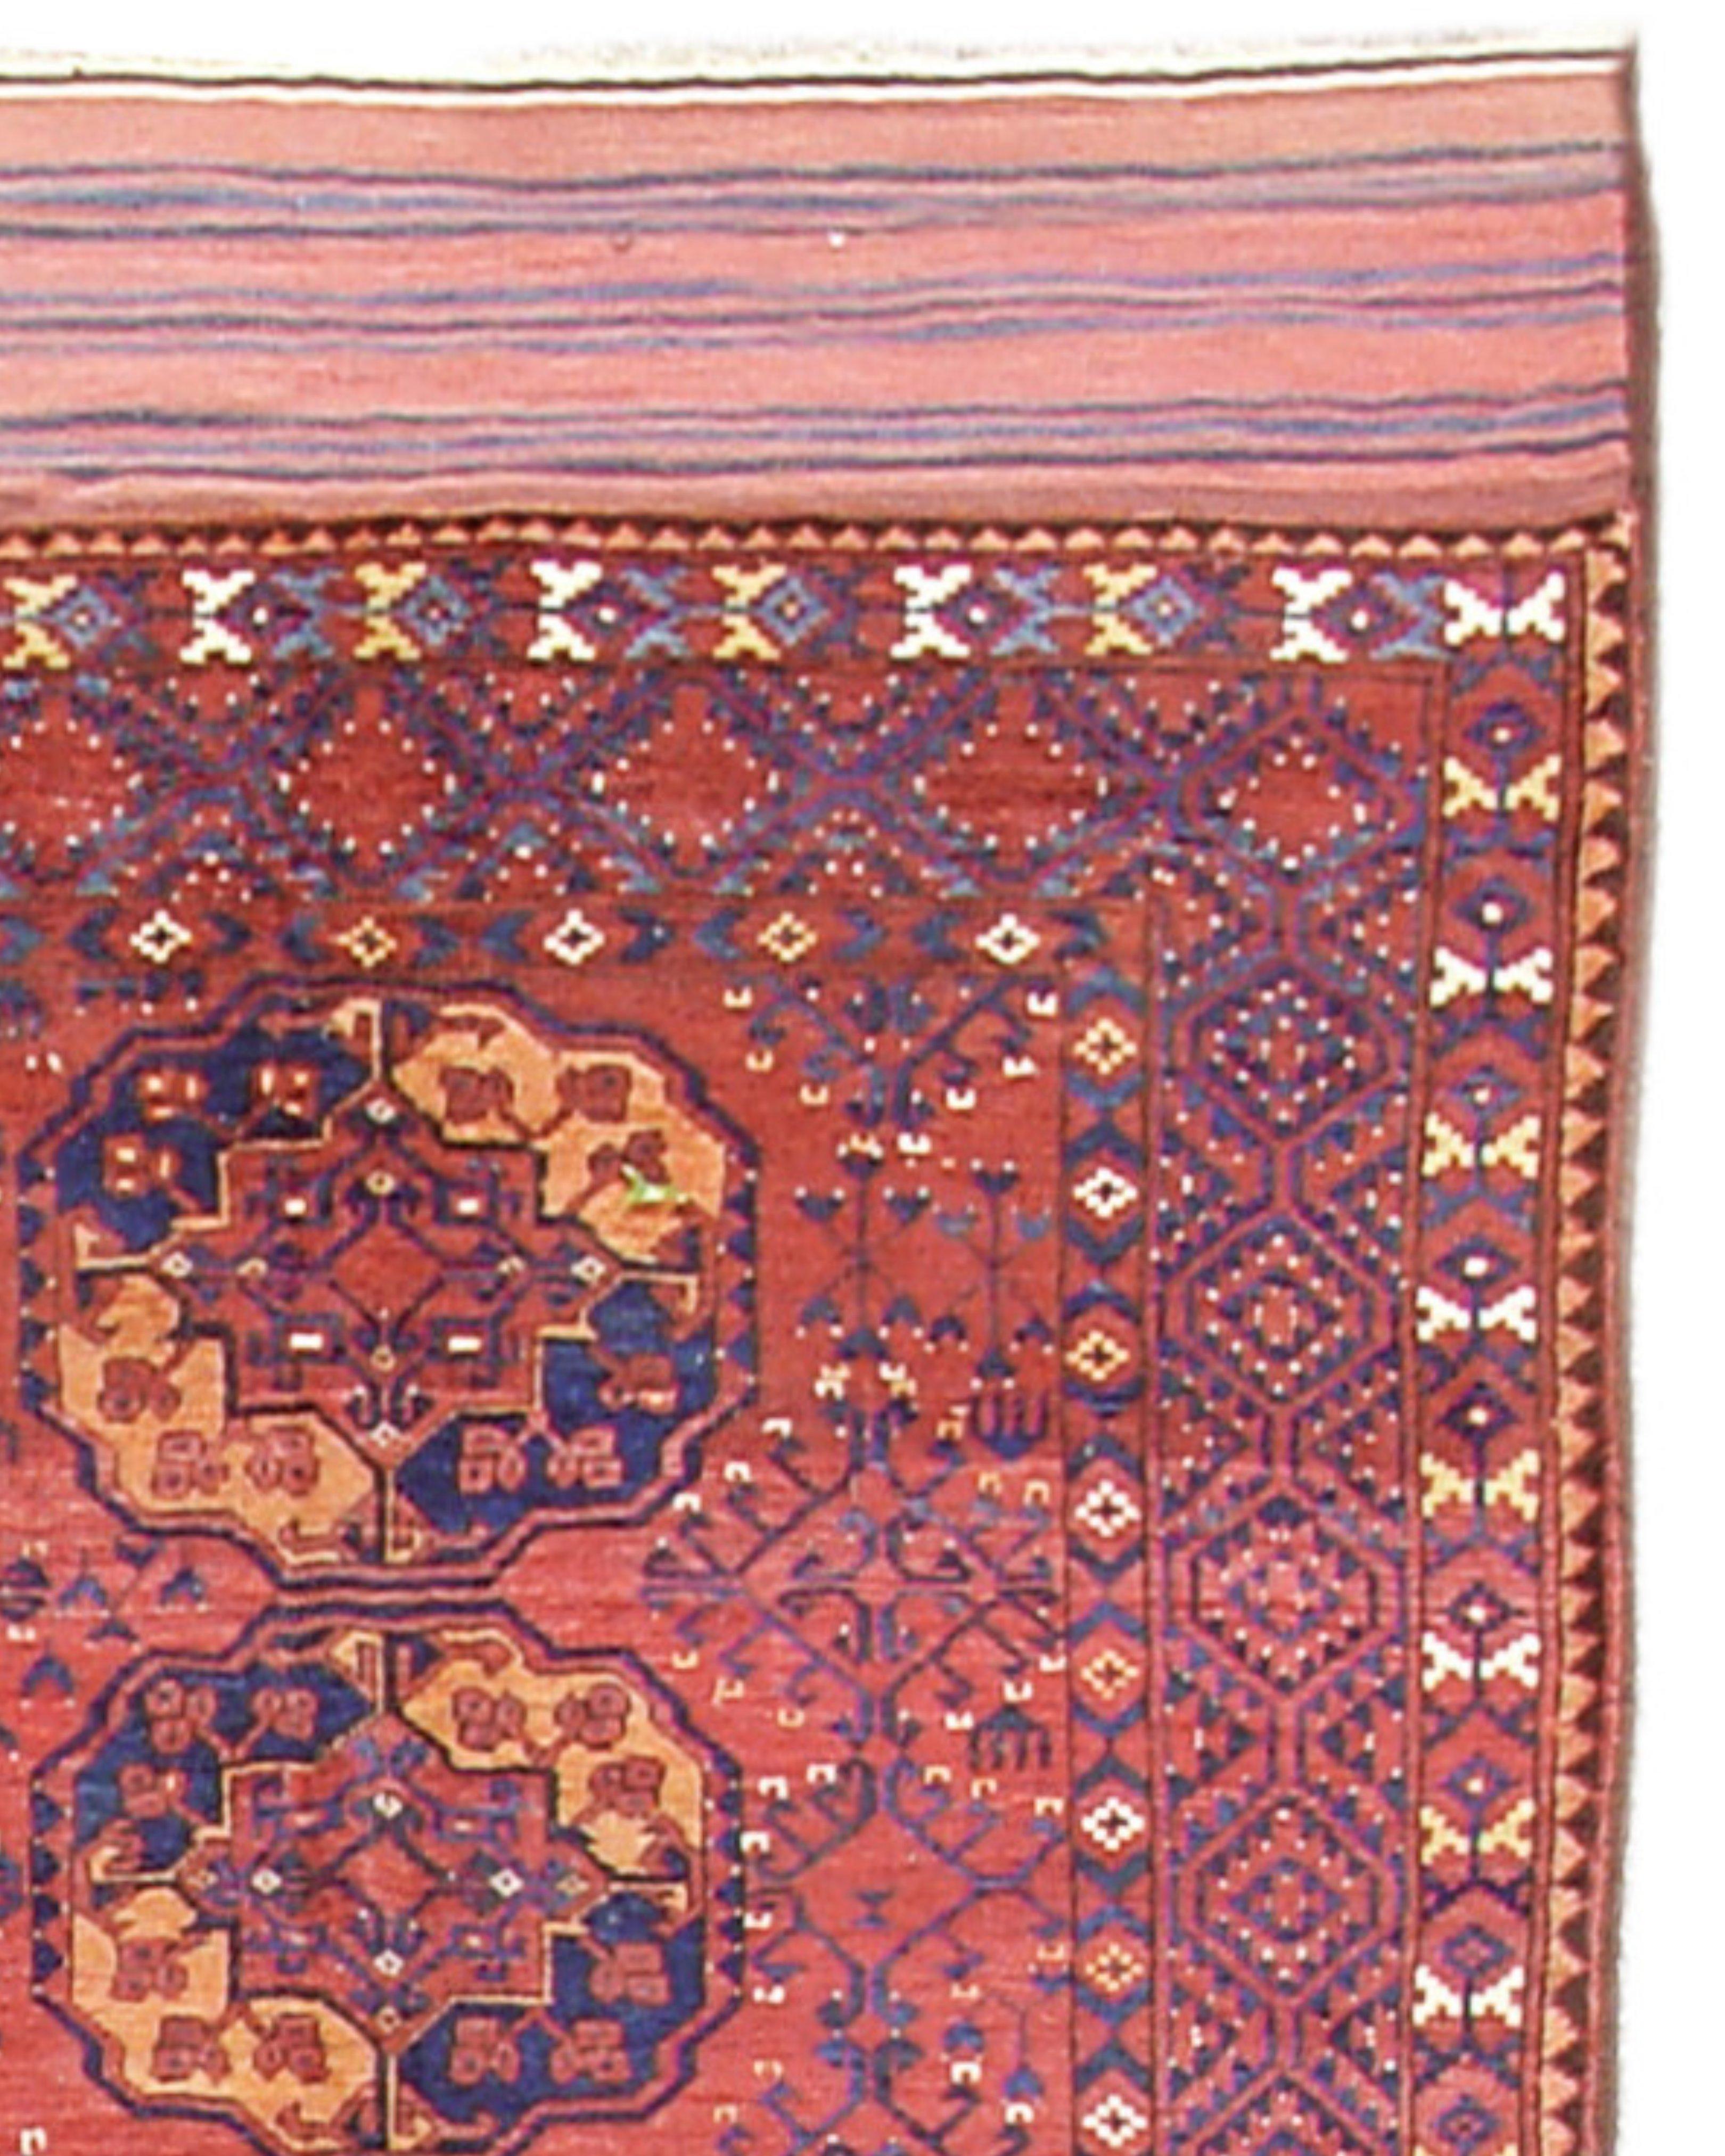 Antique Turkmen Ersari Rug, Late 19th Century

Additional Information:
Dimensions: 8'1